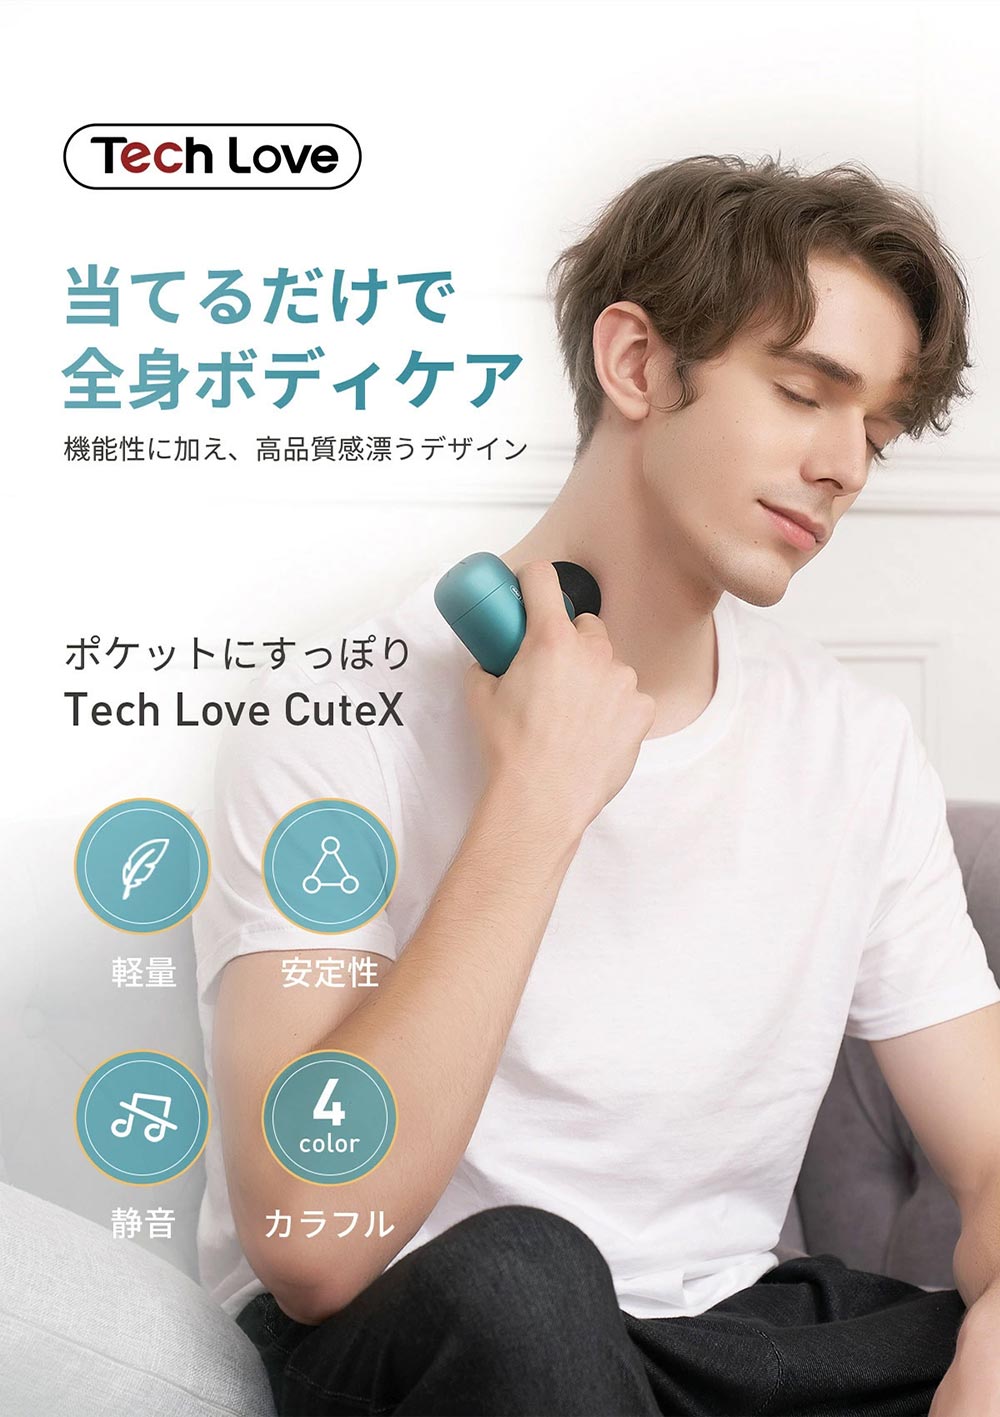 Tech Love 筋膜リリース マッサージガン CuteX ボディケア 全身ケア 